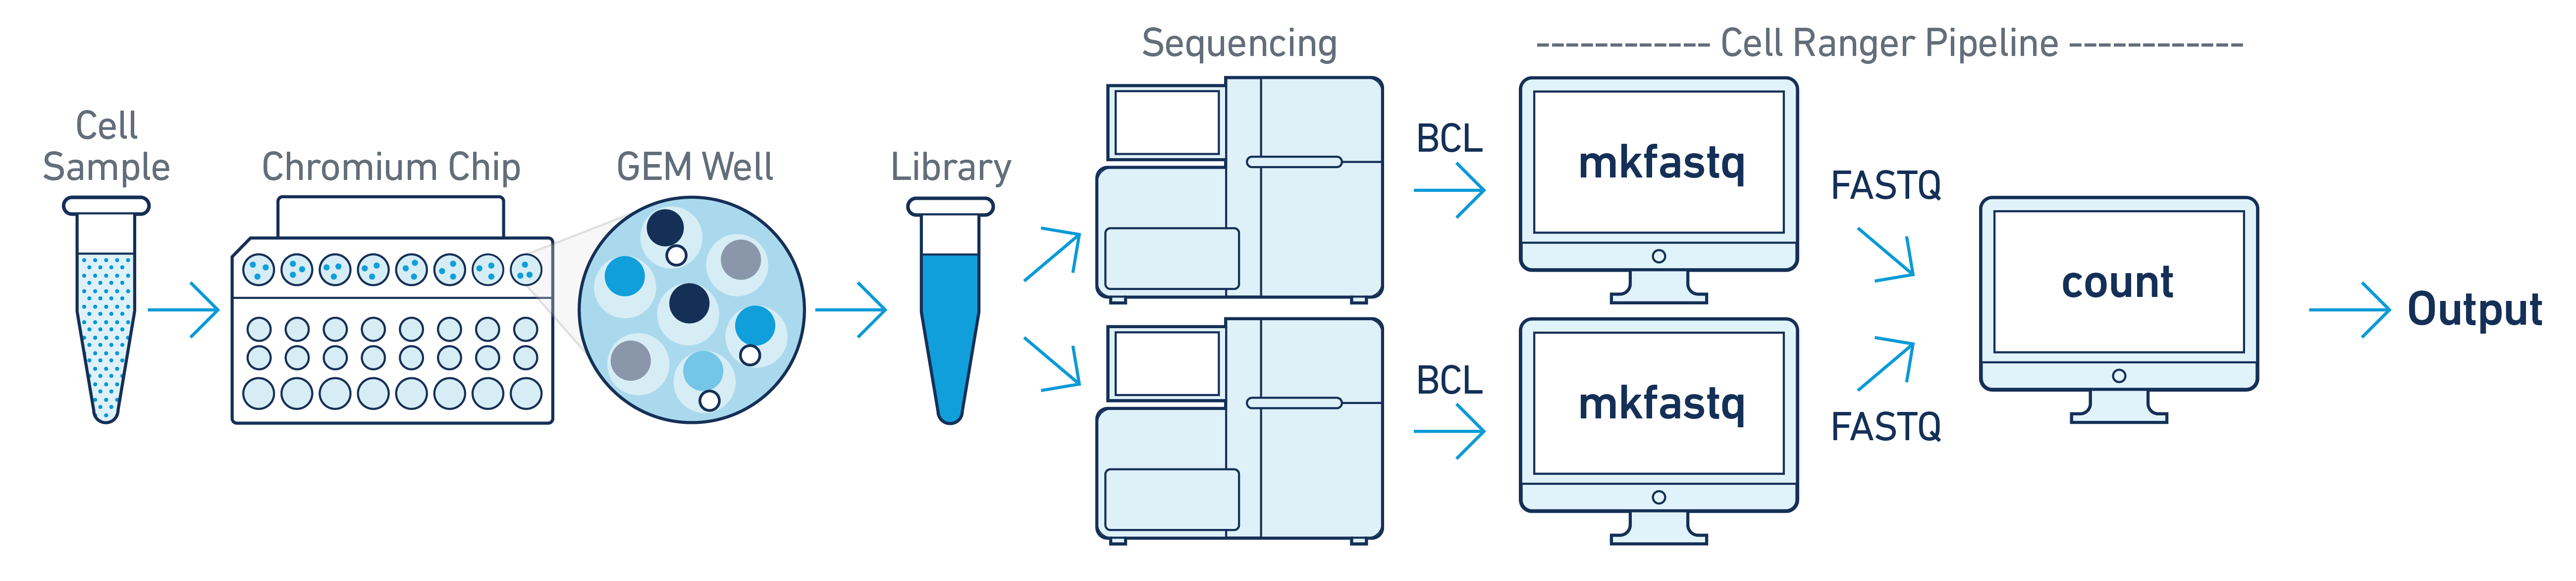 cellranger-atac multiple sequencing runs